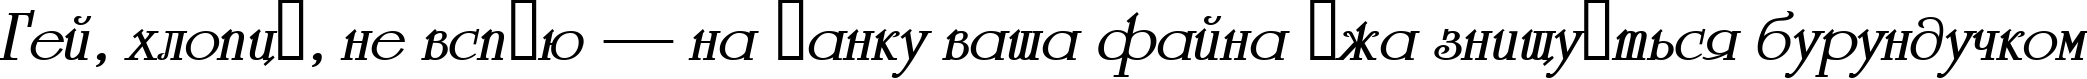 Пример написания шрифтом a_Romanus BoldItalic текста на украинском